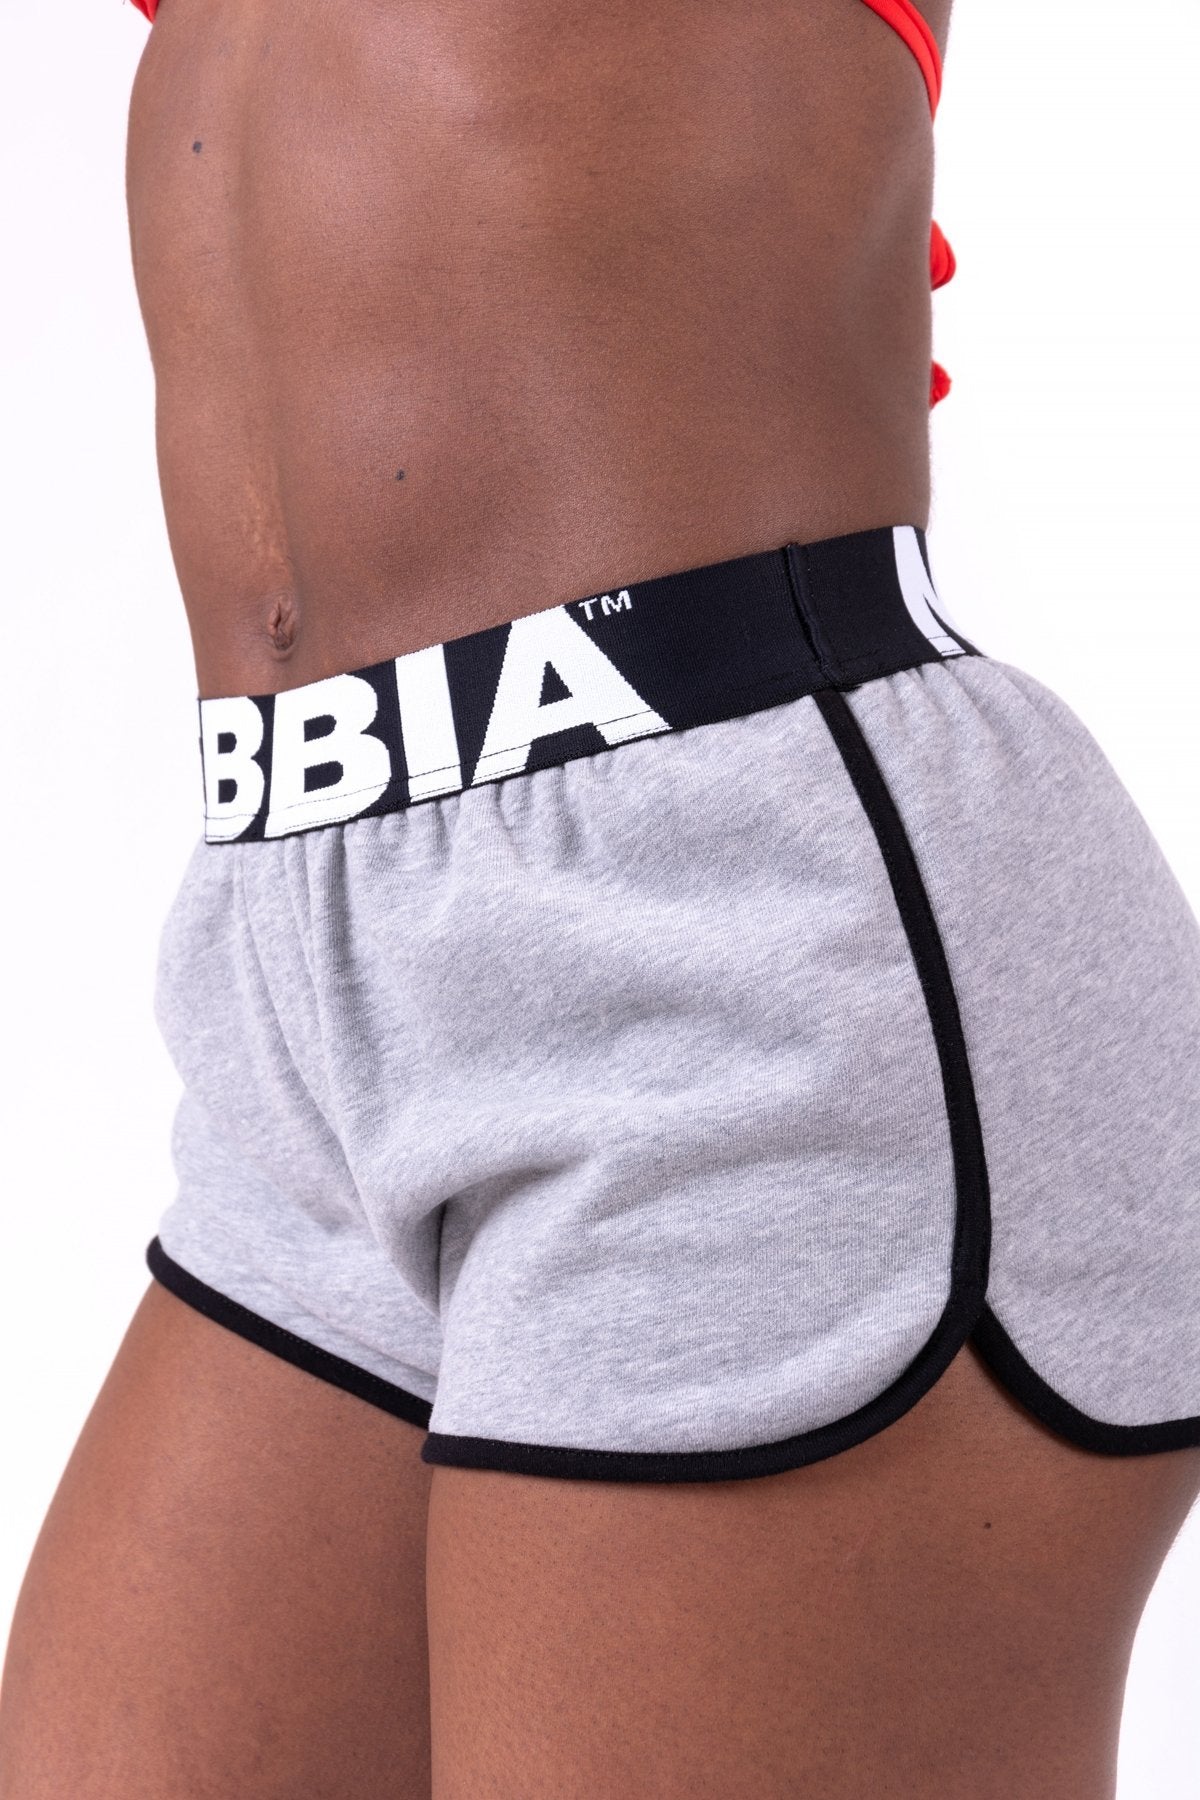 NEBBIA Contrast Sweatpants - Fitness Factory